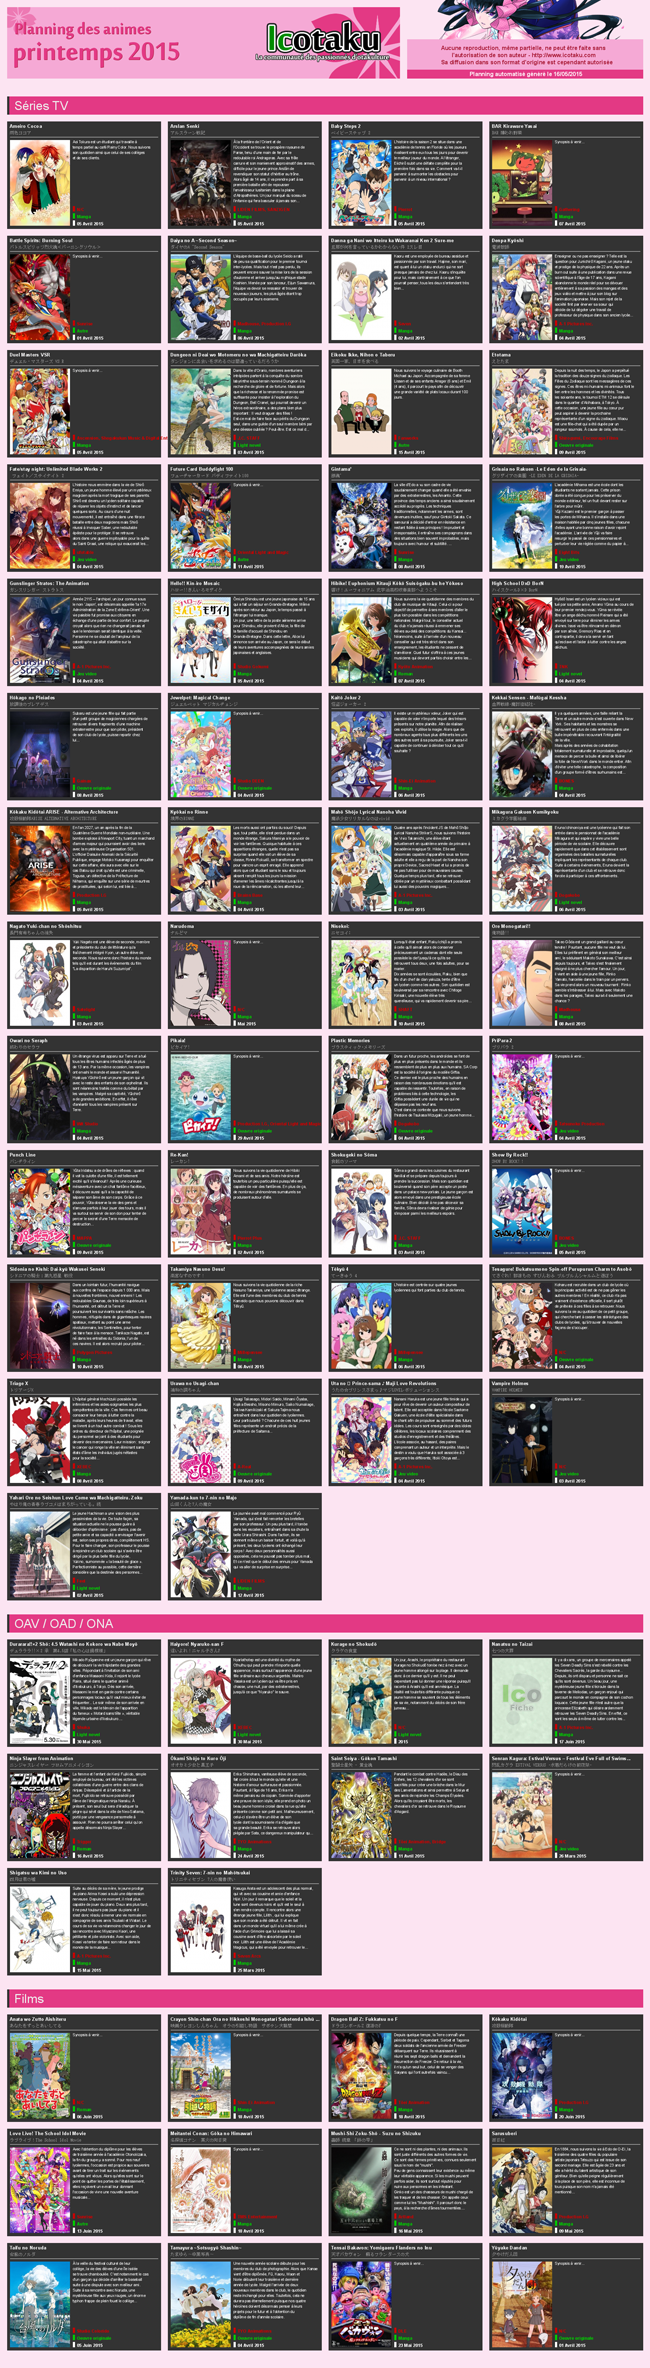 http://forum.icotaku.com/images/forum/plannings/printemps2015/planning_anime_printemps_2015_mini.png